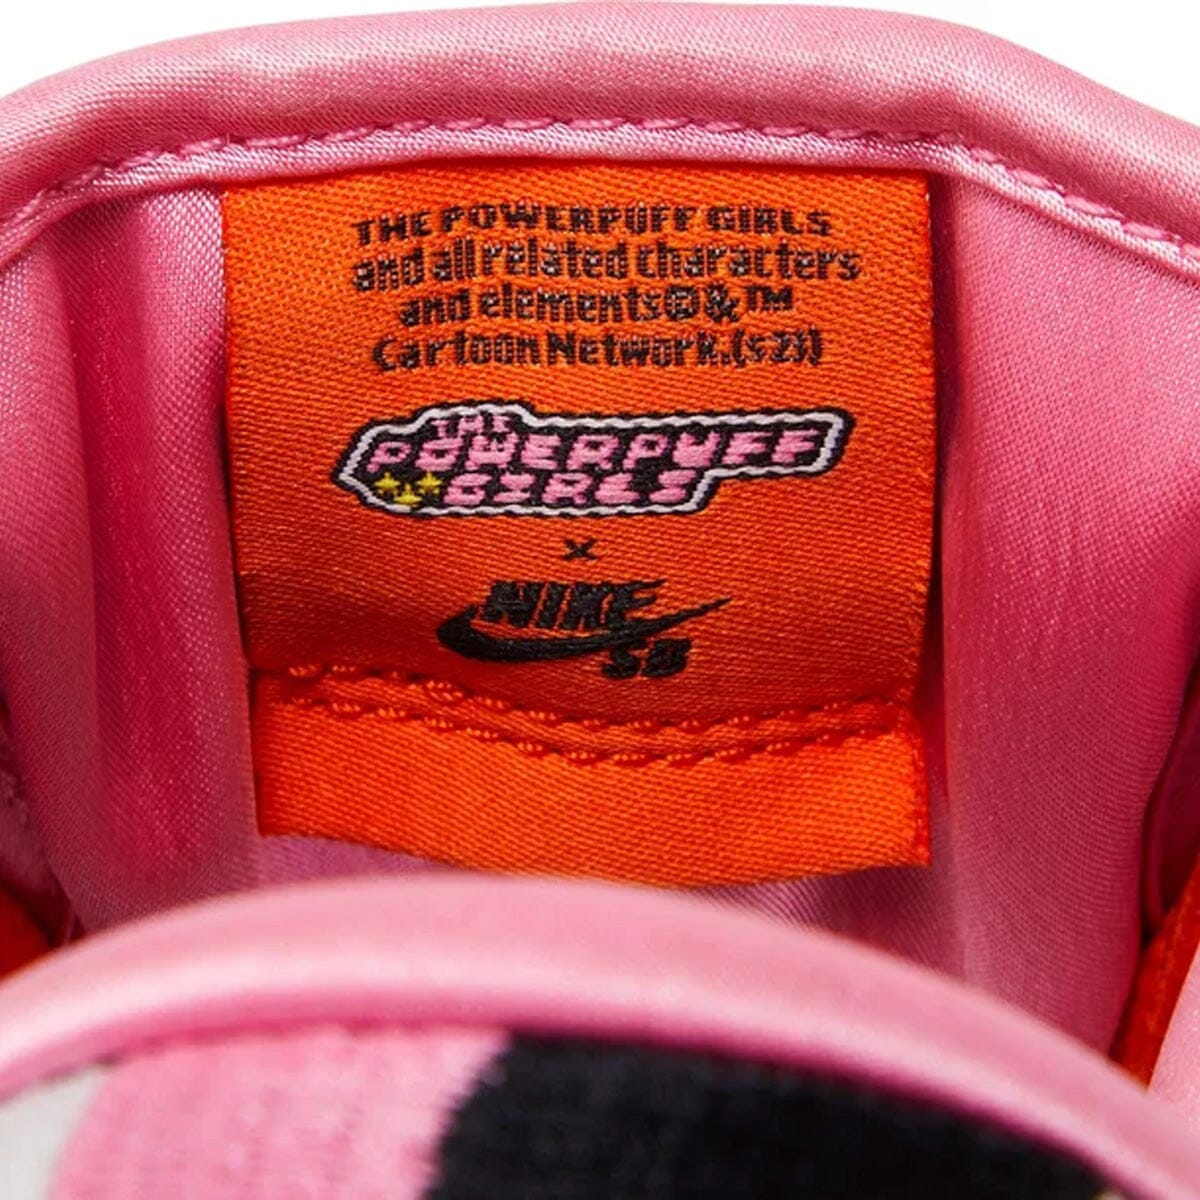 Nike SB Dunk Low "The Powerpuff Girls x Blossom" Meninas Super Poderosas Rosa Blizz Sneakers 